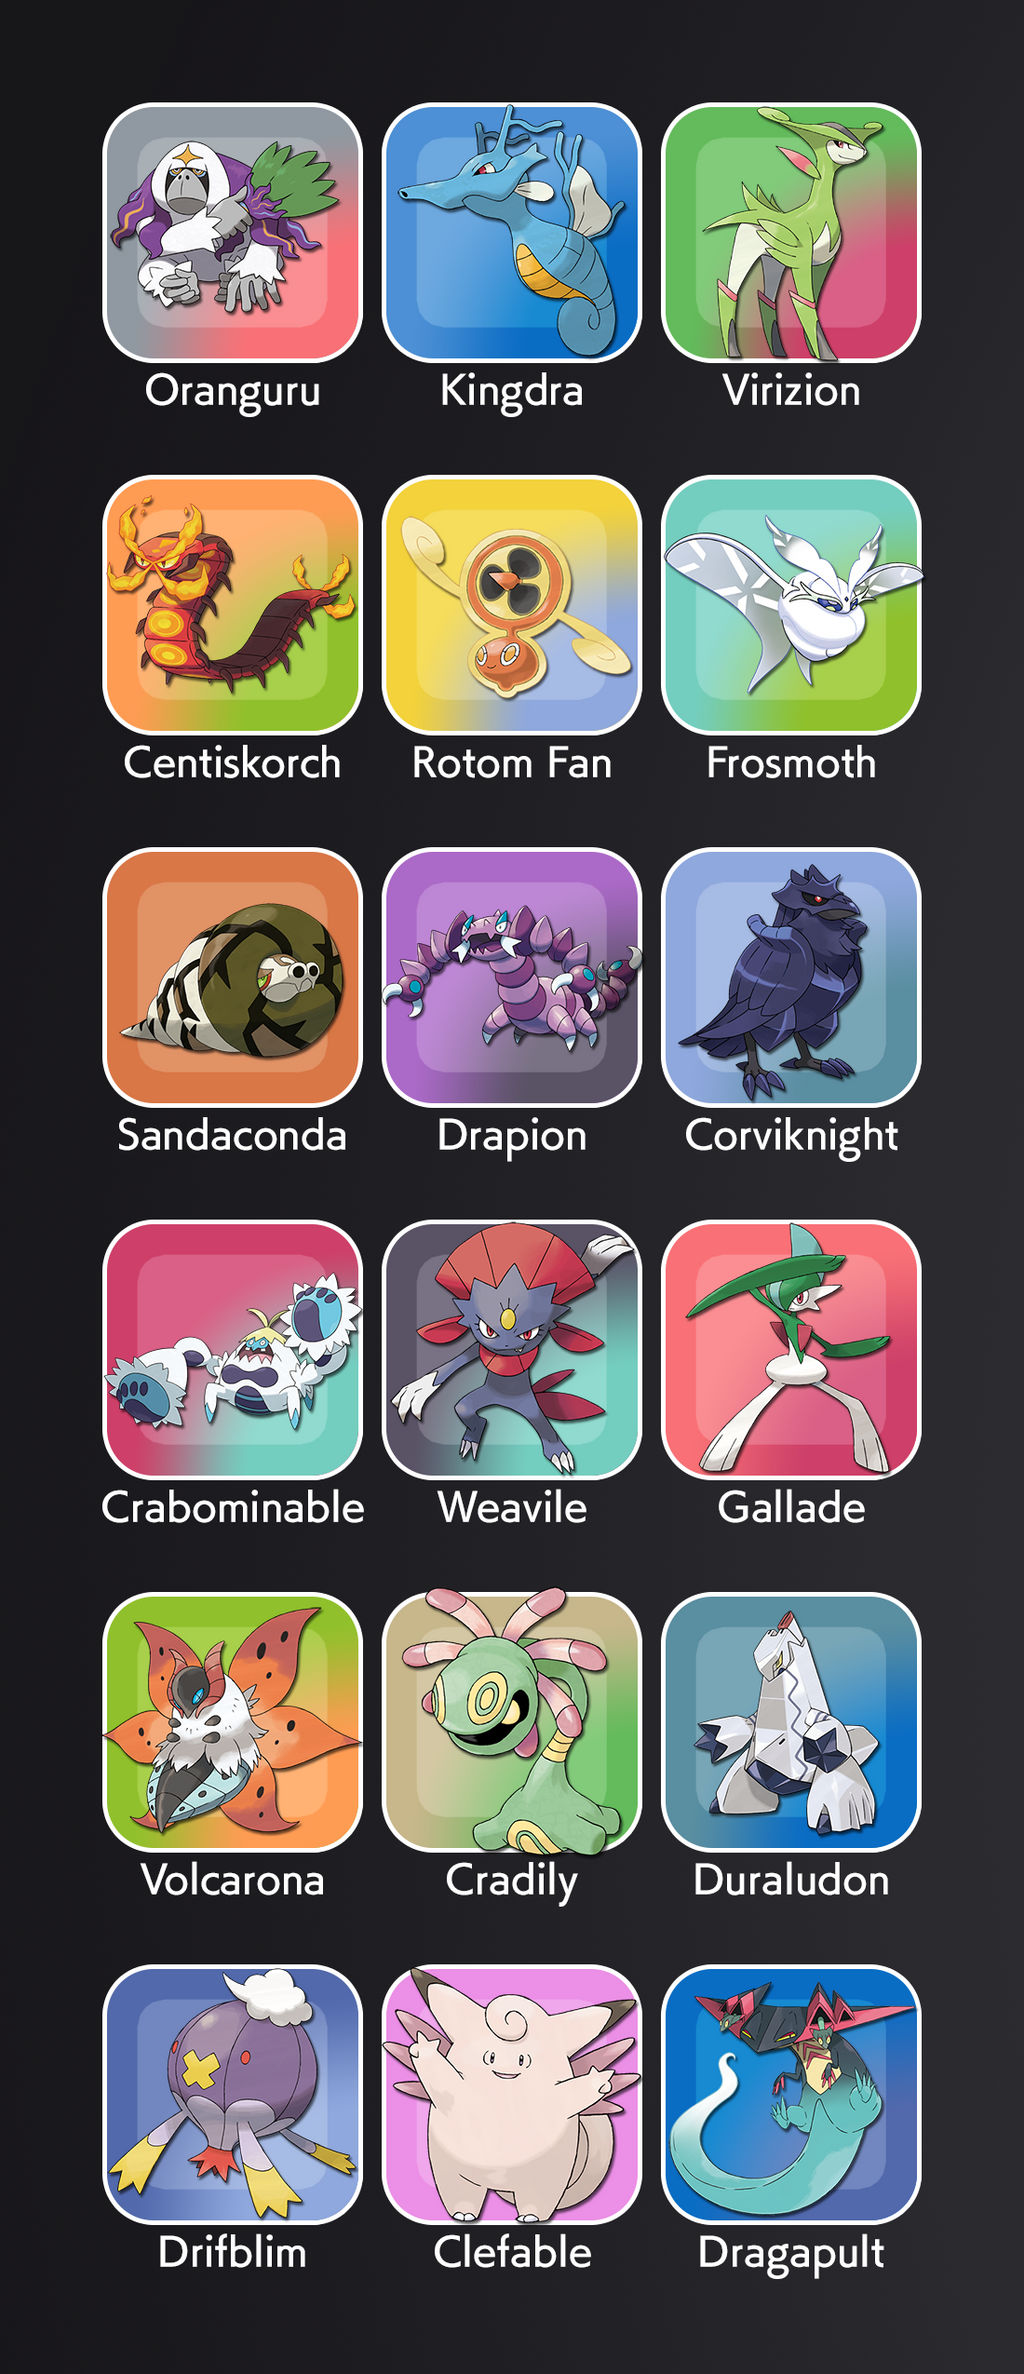 Pokemon Type Chart by AdeptCharon on DeviantArt